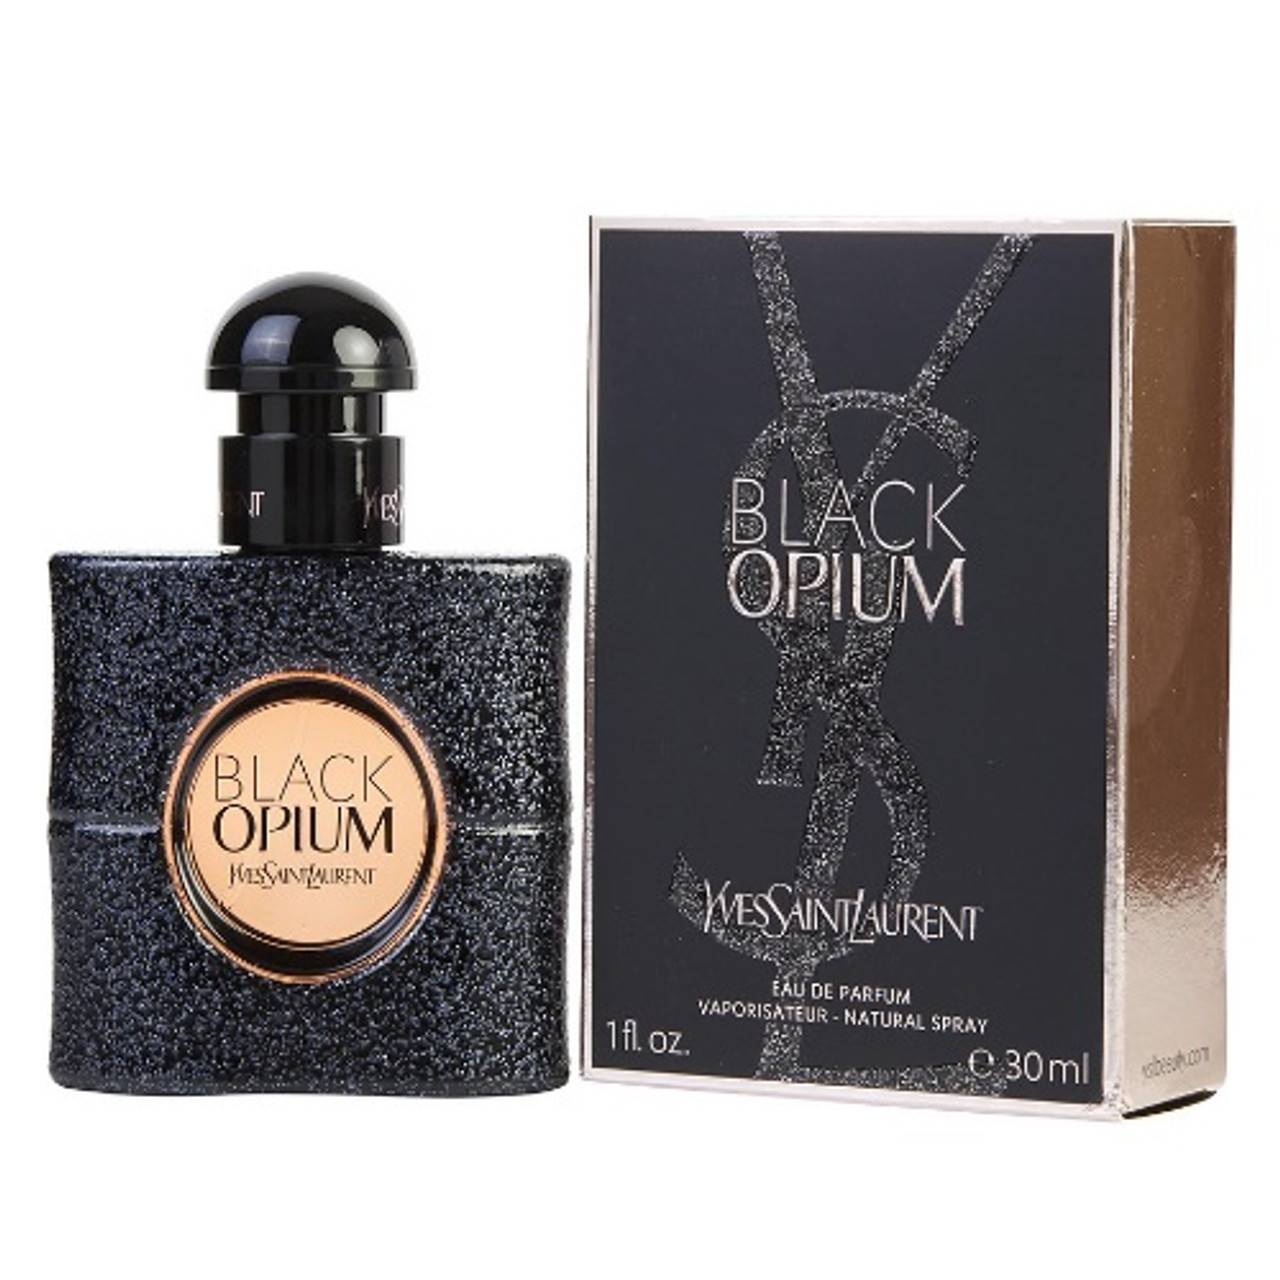 Yves Saint Laurent - Black Opium EDP Intense 50ml # 6140274 – Diplomatic  Duty Free Shop in Washington DC